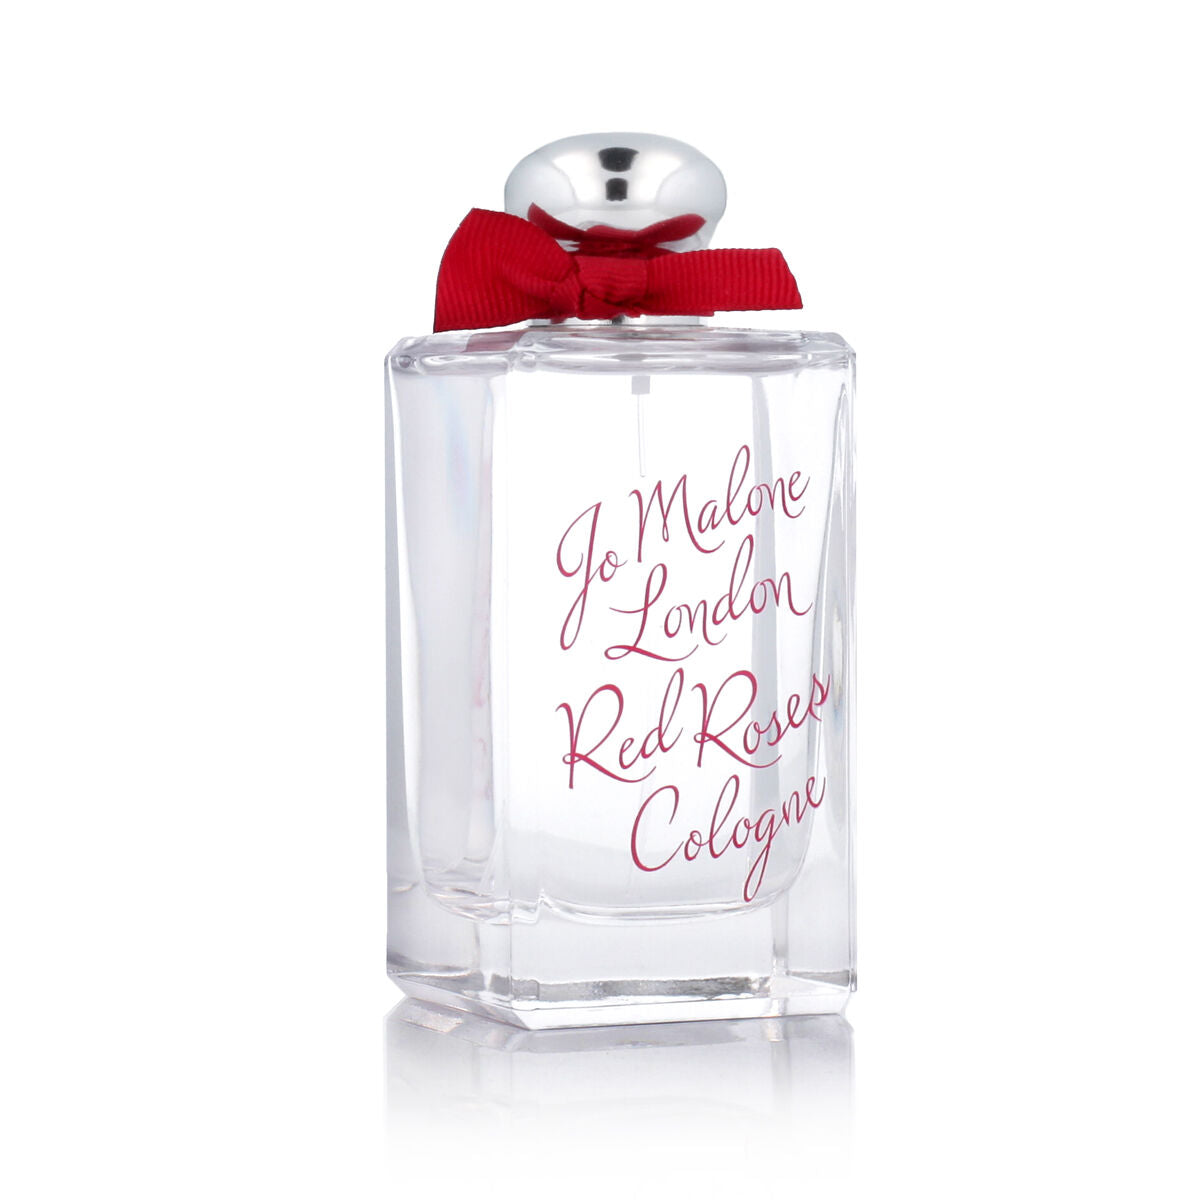 Unisex Perfume Jo Malone EDC Red Roses Cologne 100 ml-0